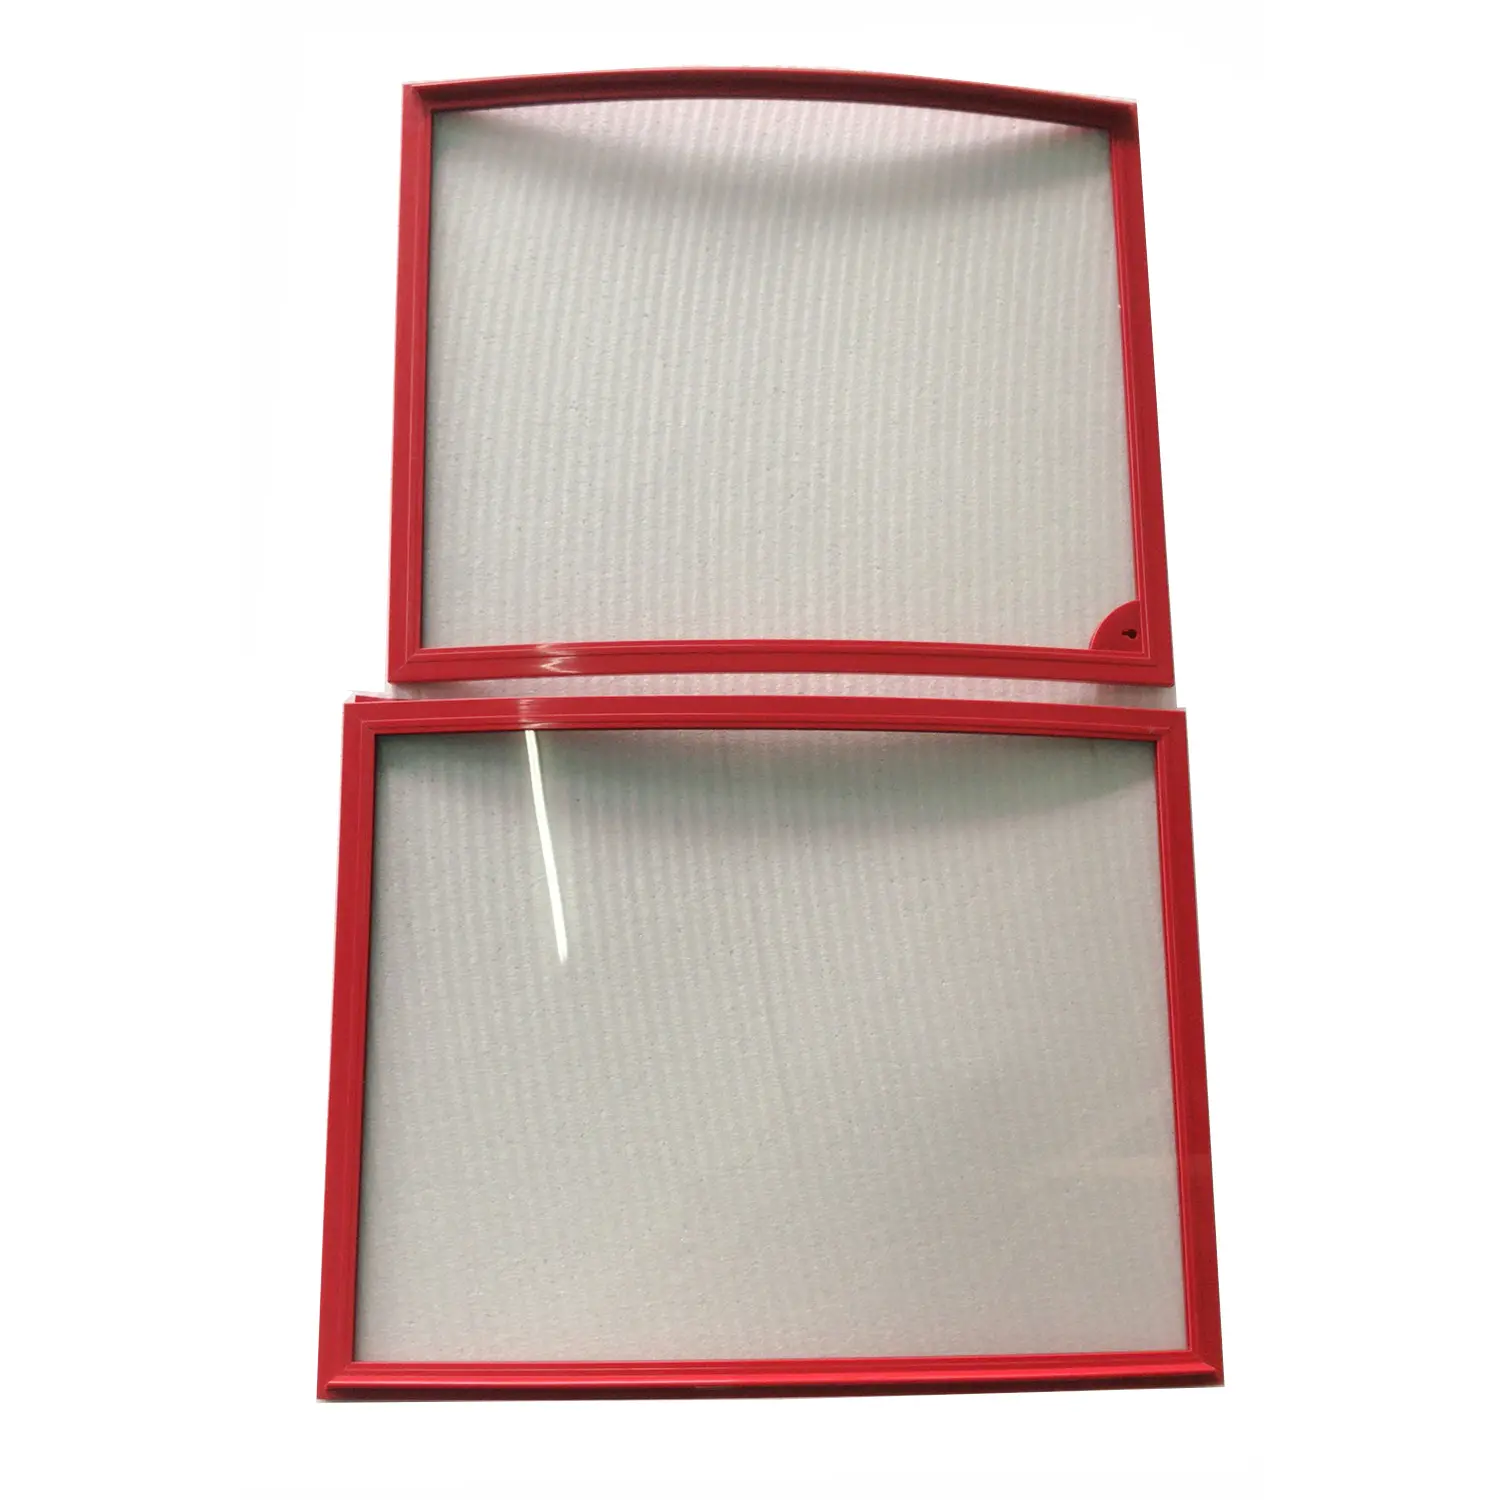 Yuebang's Display Freezer Glass Door: Premium Customization for Optimal Visibility